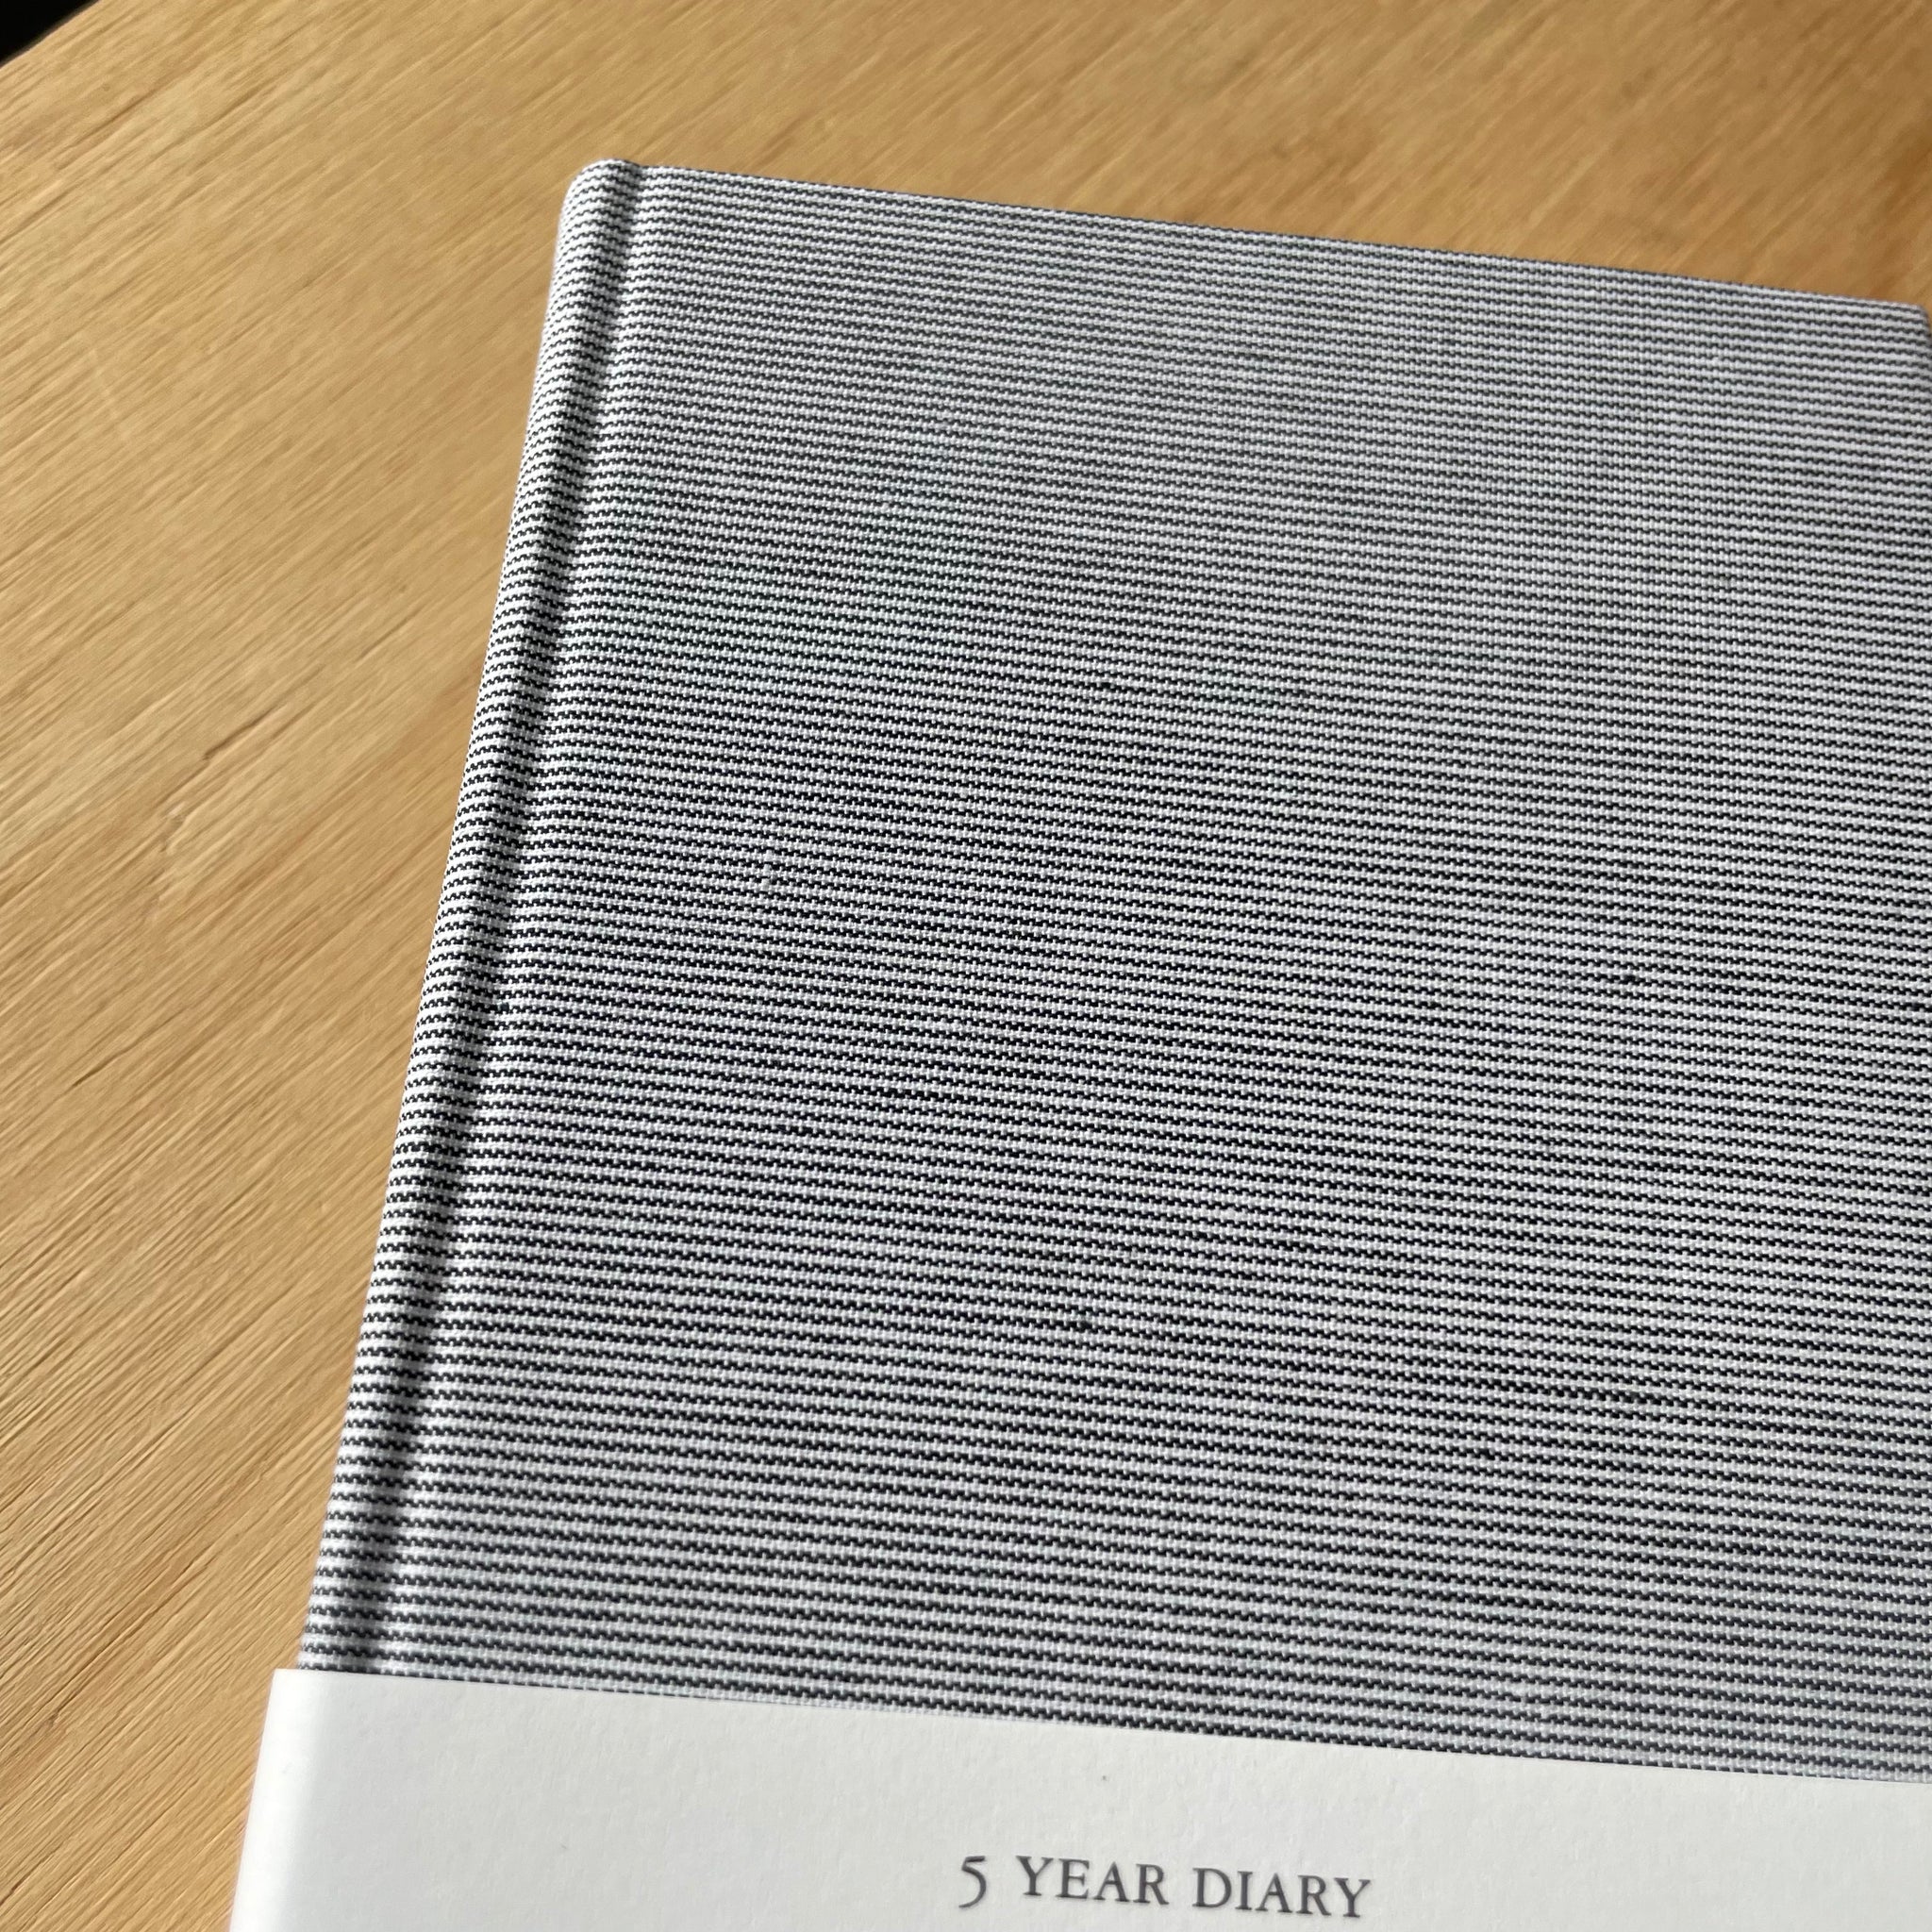 Five Year Diary